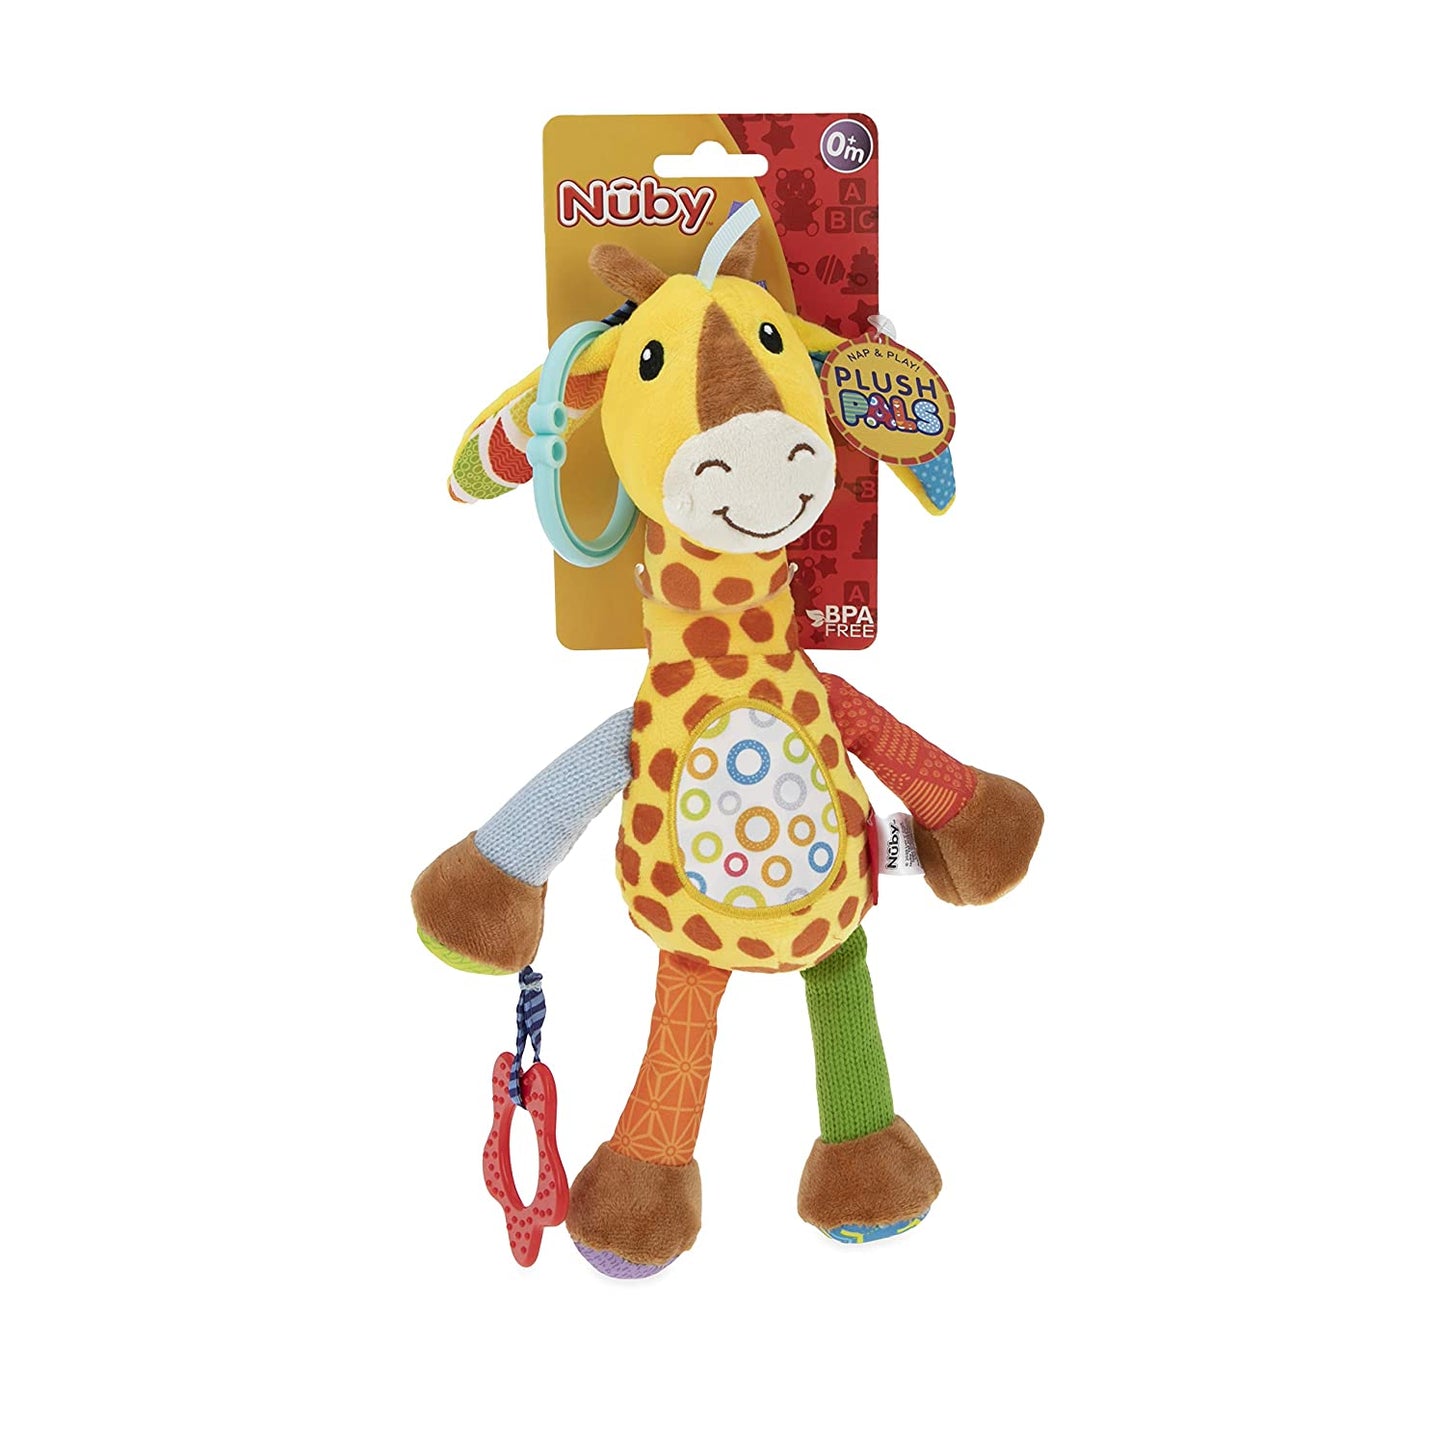 Nuby Interactive Soft Plush Pal Toy- Om+, Characters Vary - Monkey, Elephant, Giraffe